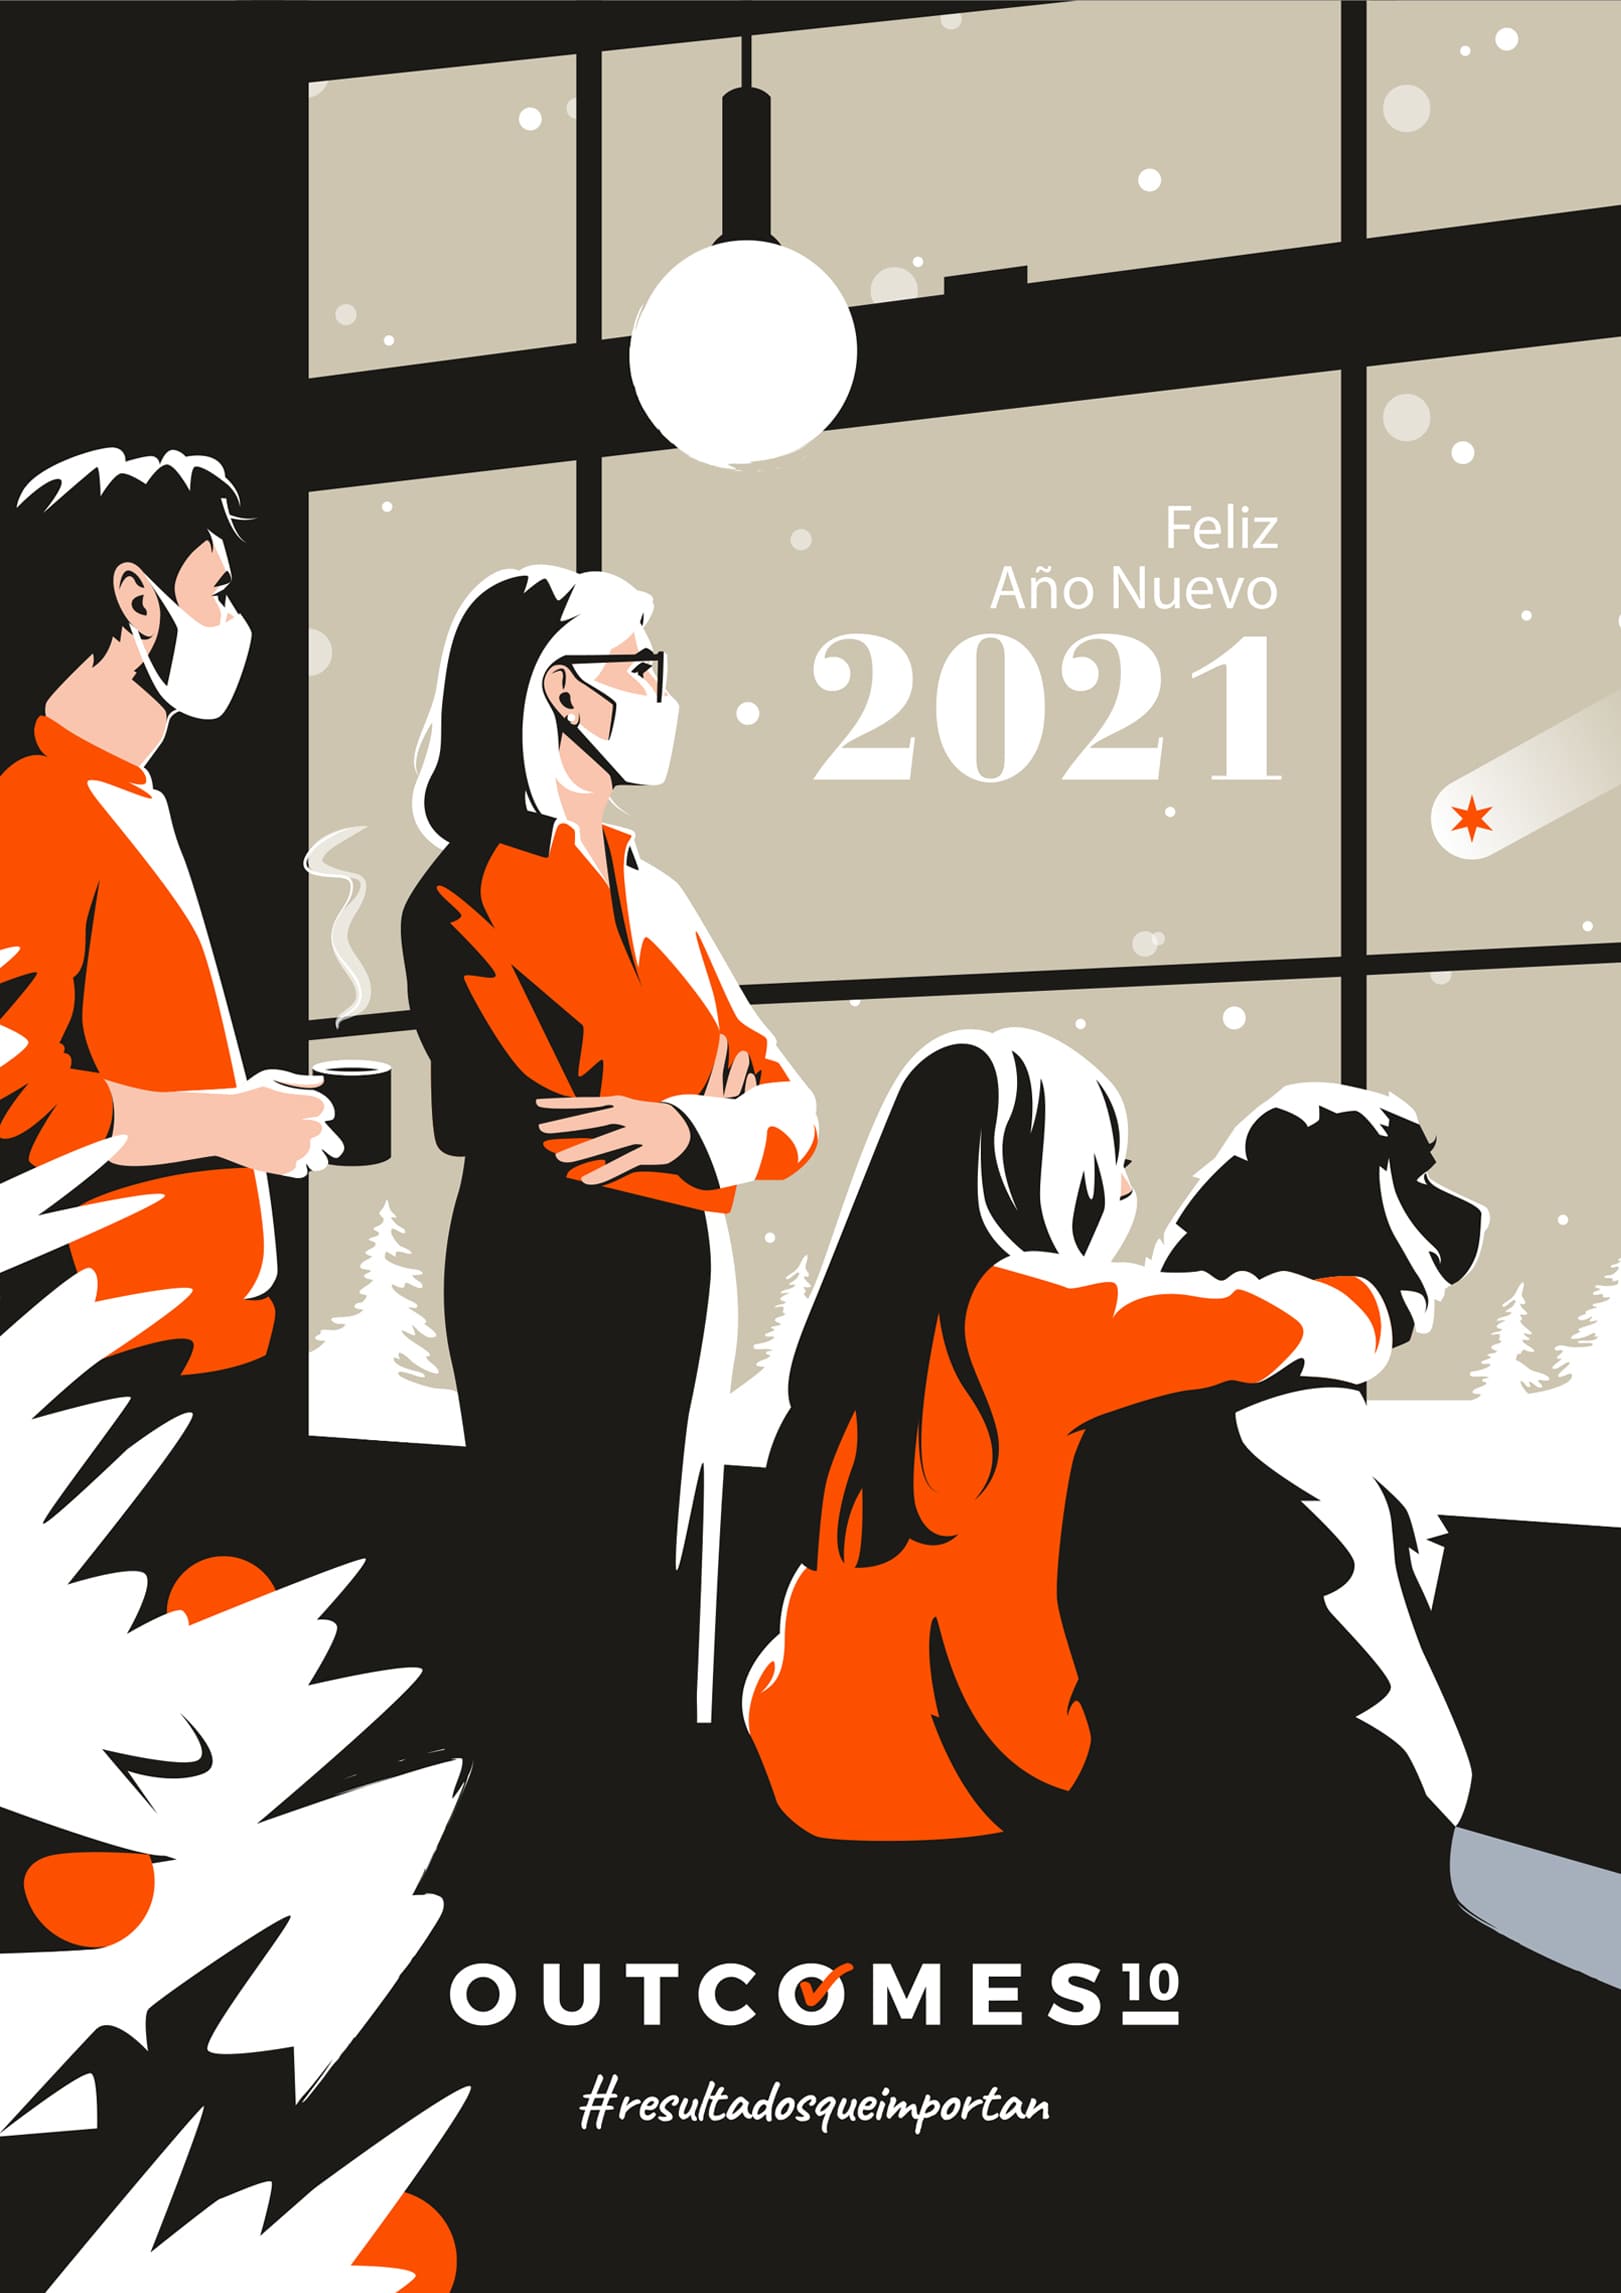 Christmas Digital Card for Outcomes'10 2020